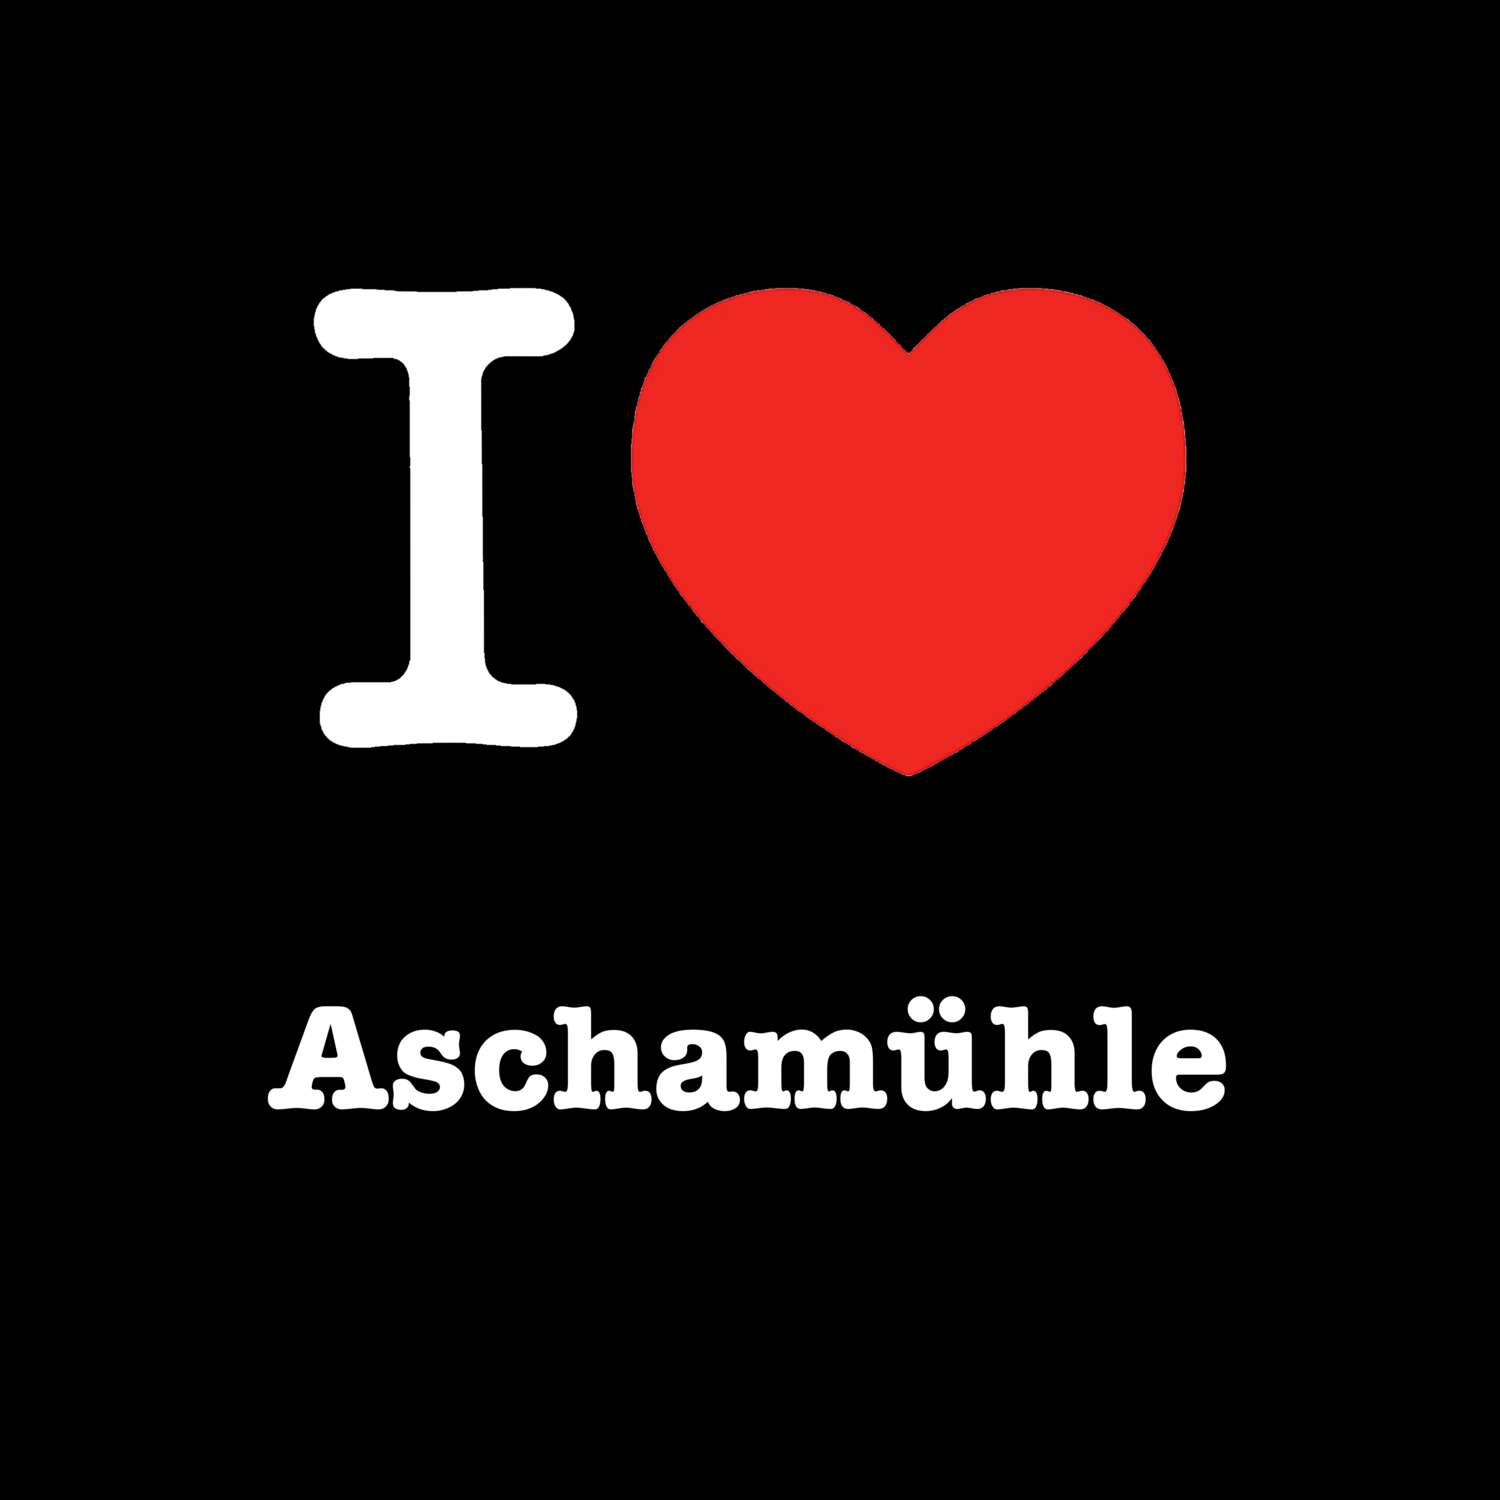 Aschamühle T-Shirt »I love«